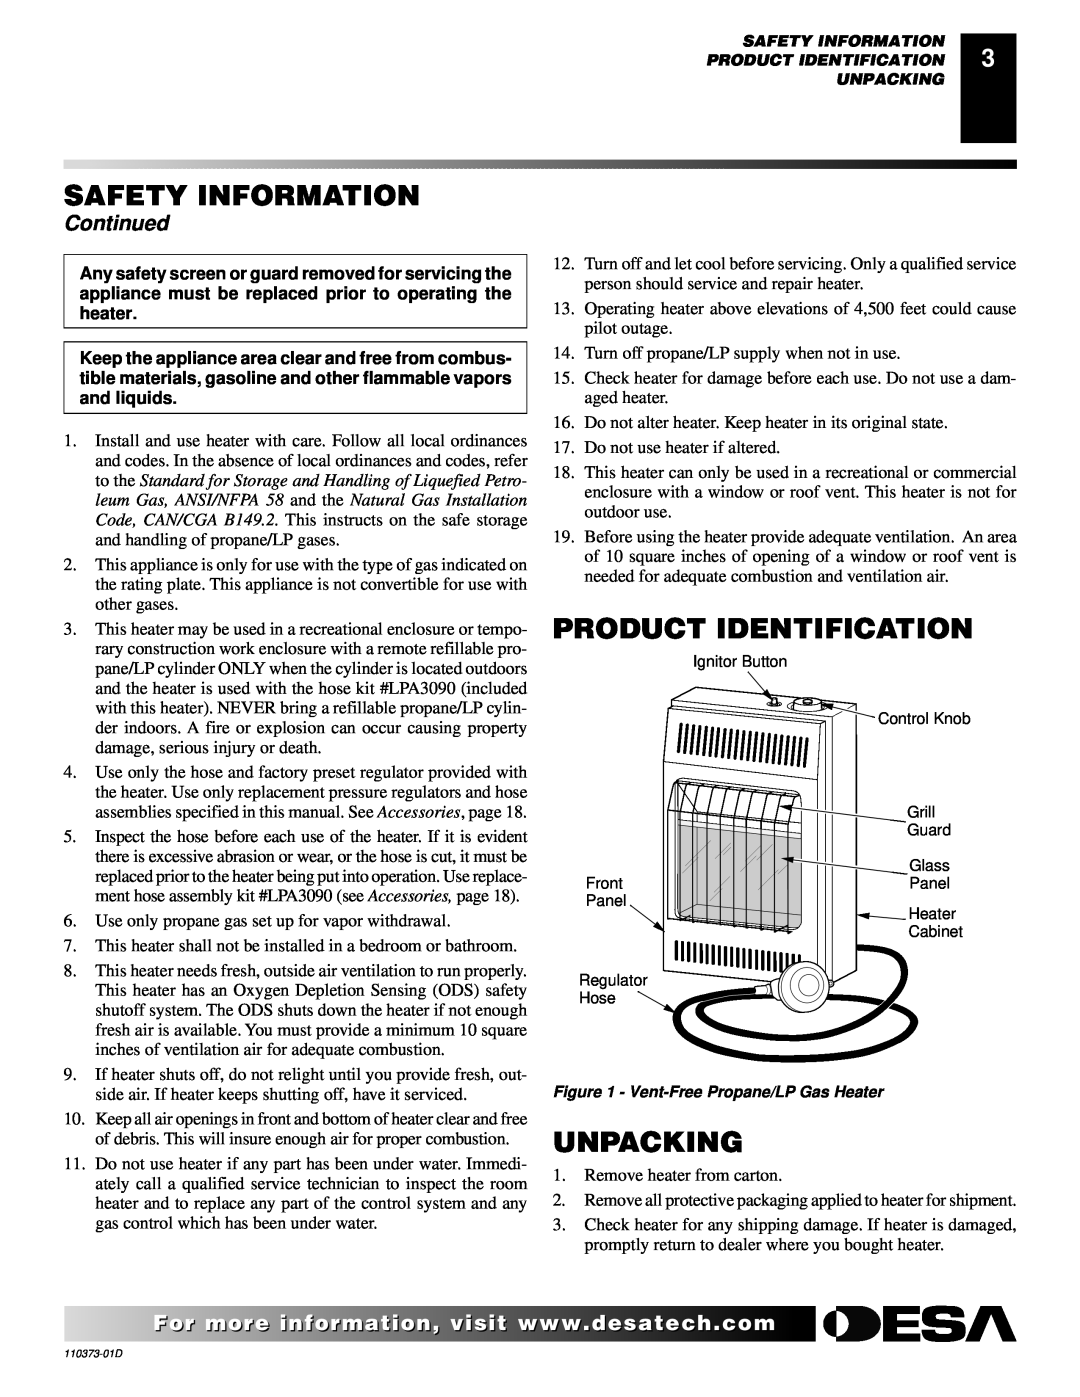 Desa REM10PT RH10PT installation manual Product Identification, Unpacking, Continued, Safety Information 